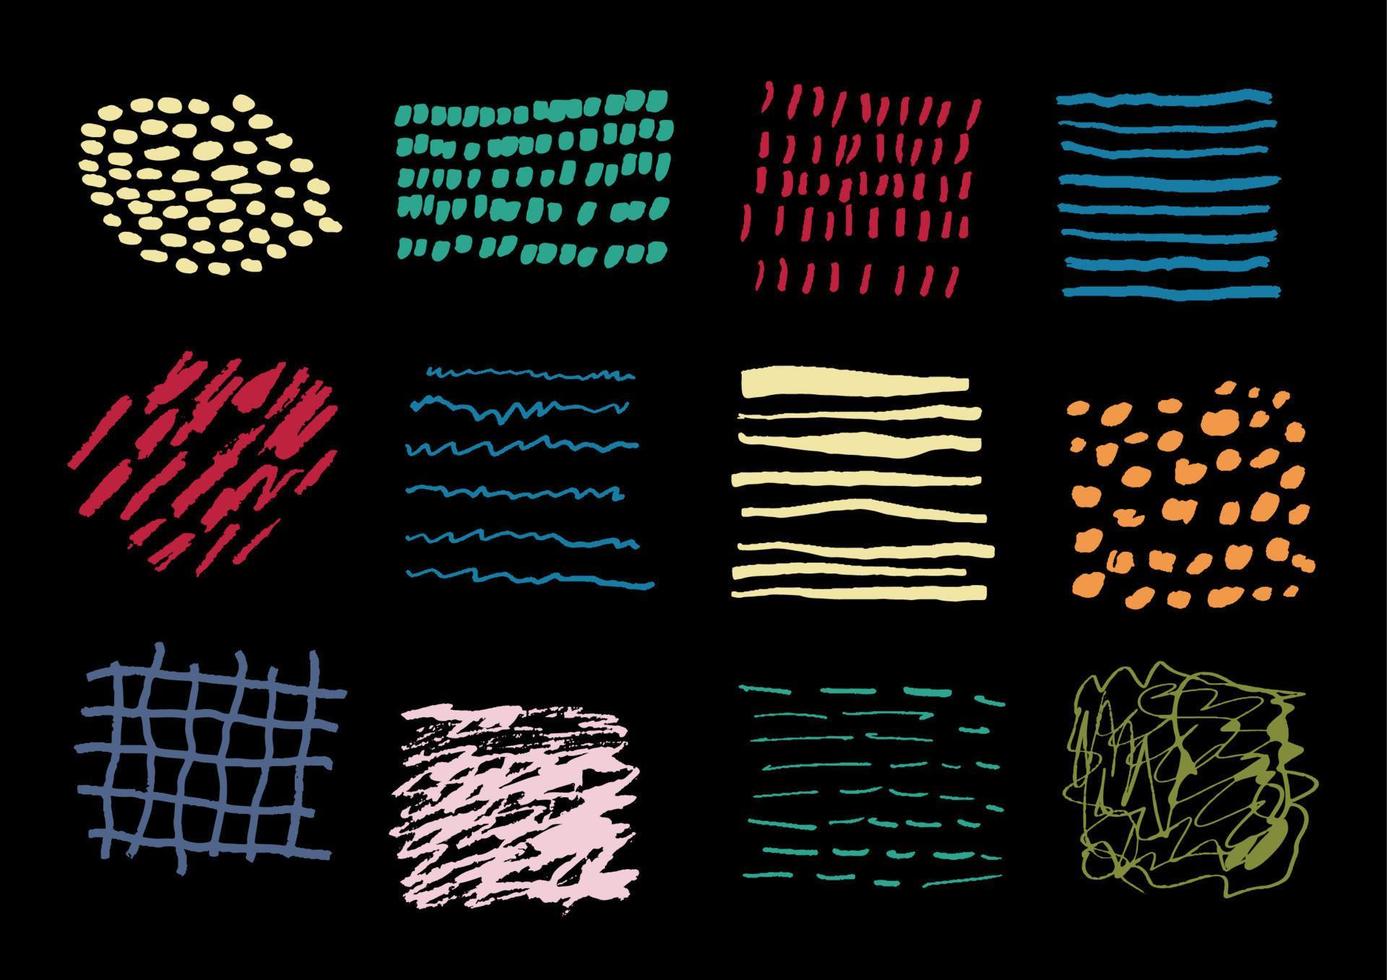 colección de elementos gráficos creativos abstractos dibujados a mano vector